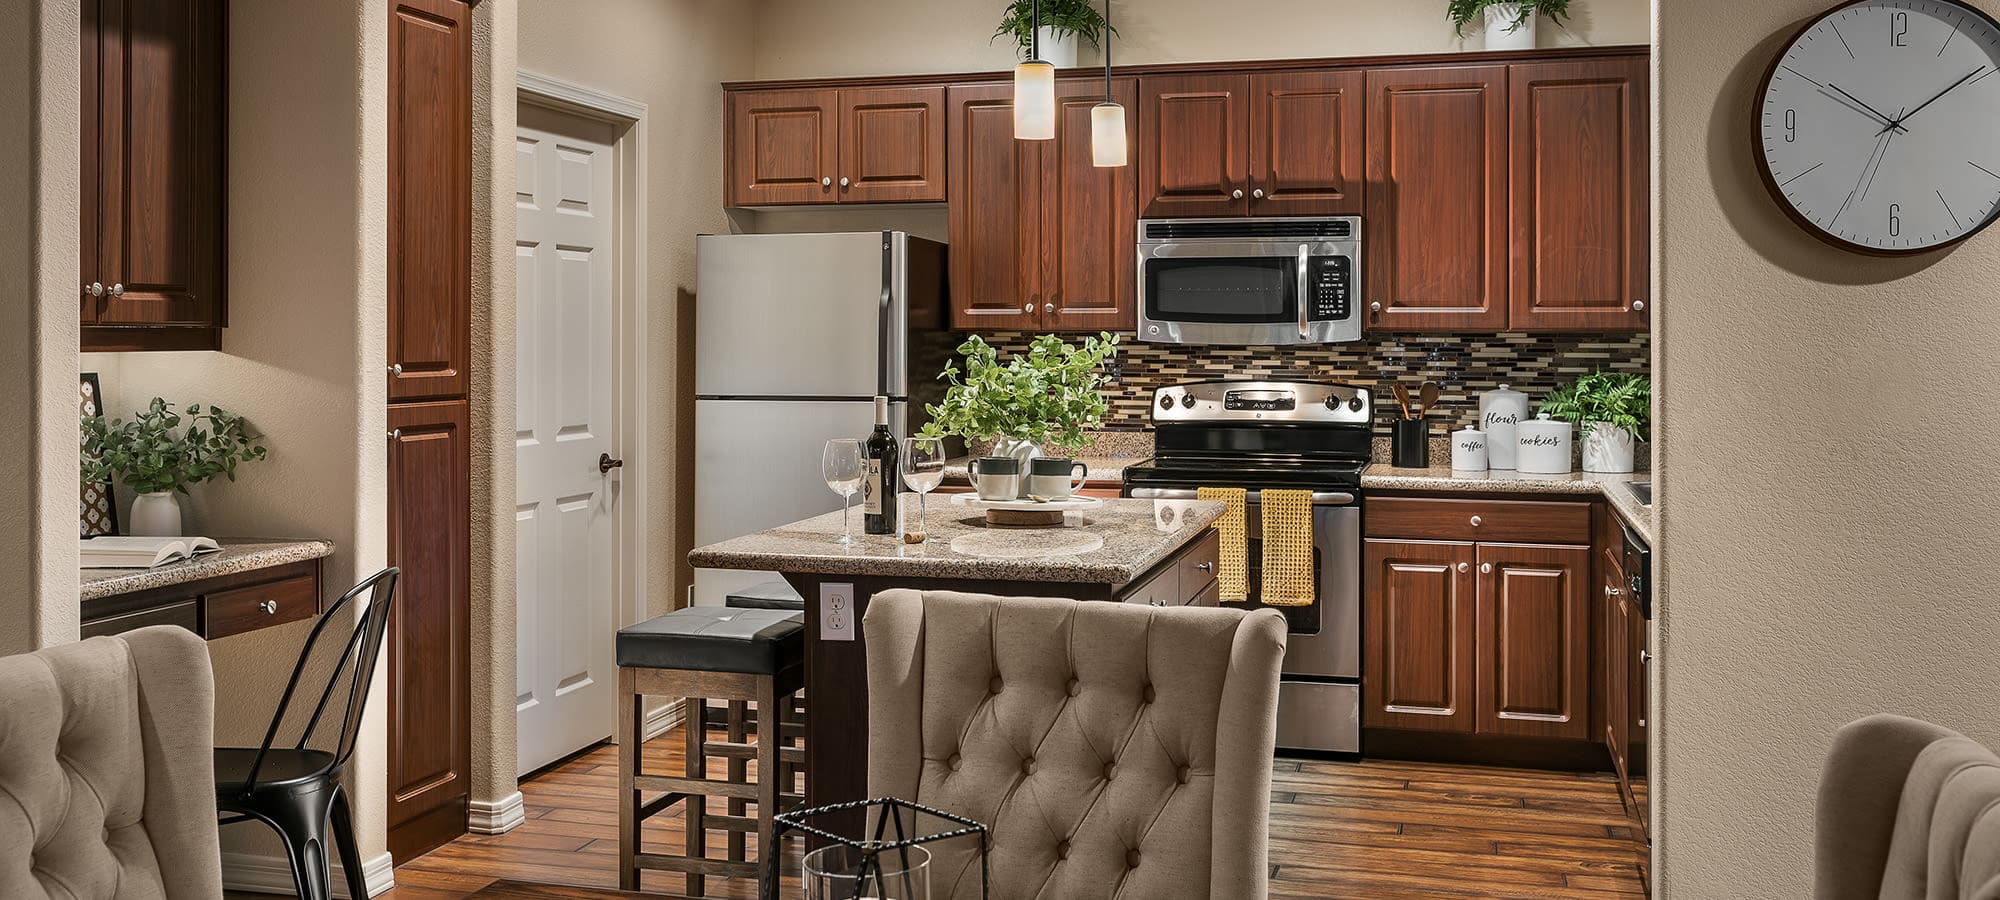 Luxury kitchen in model home at San Norterra in Phoenix, Arizona